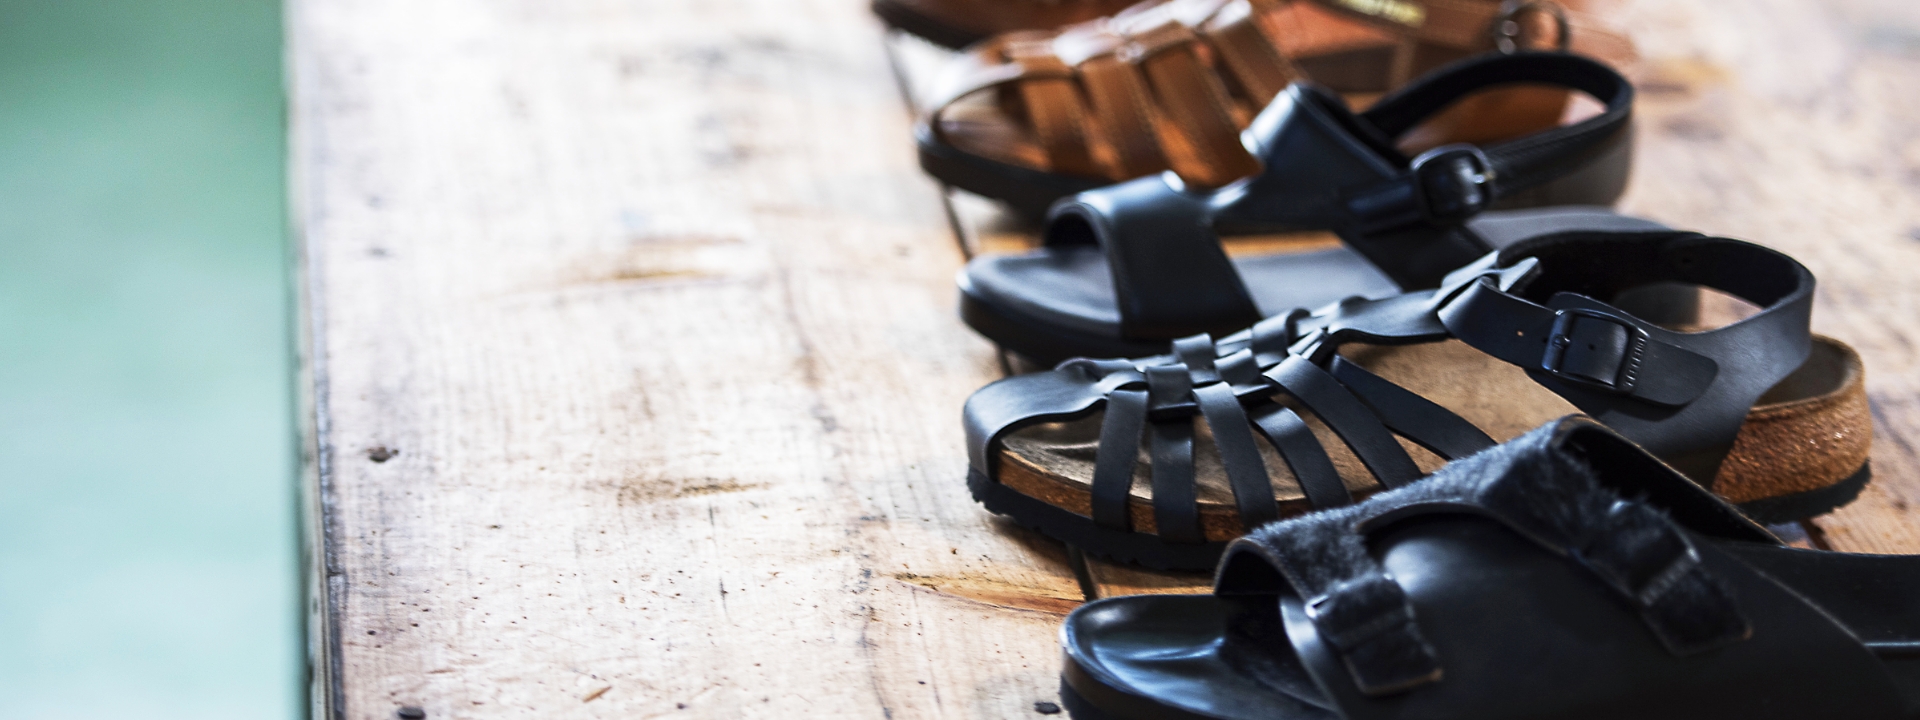 Leather shoe manufacturing Sandal manufacturing Sneaker manufacturing